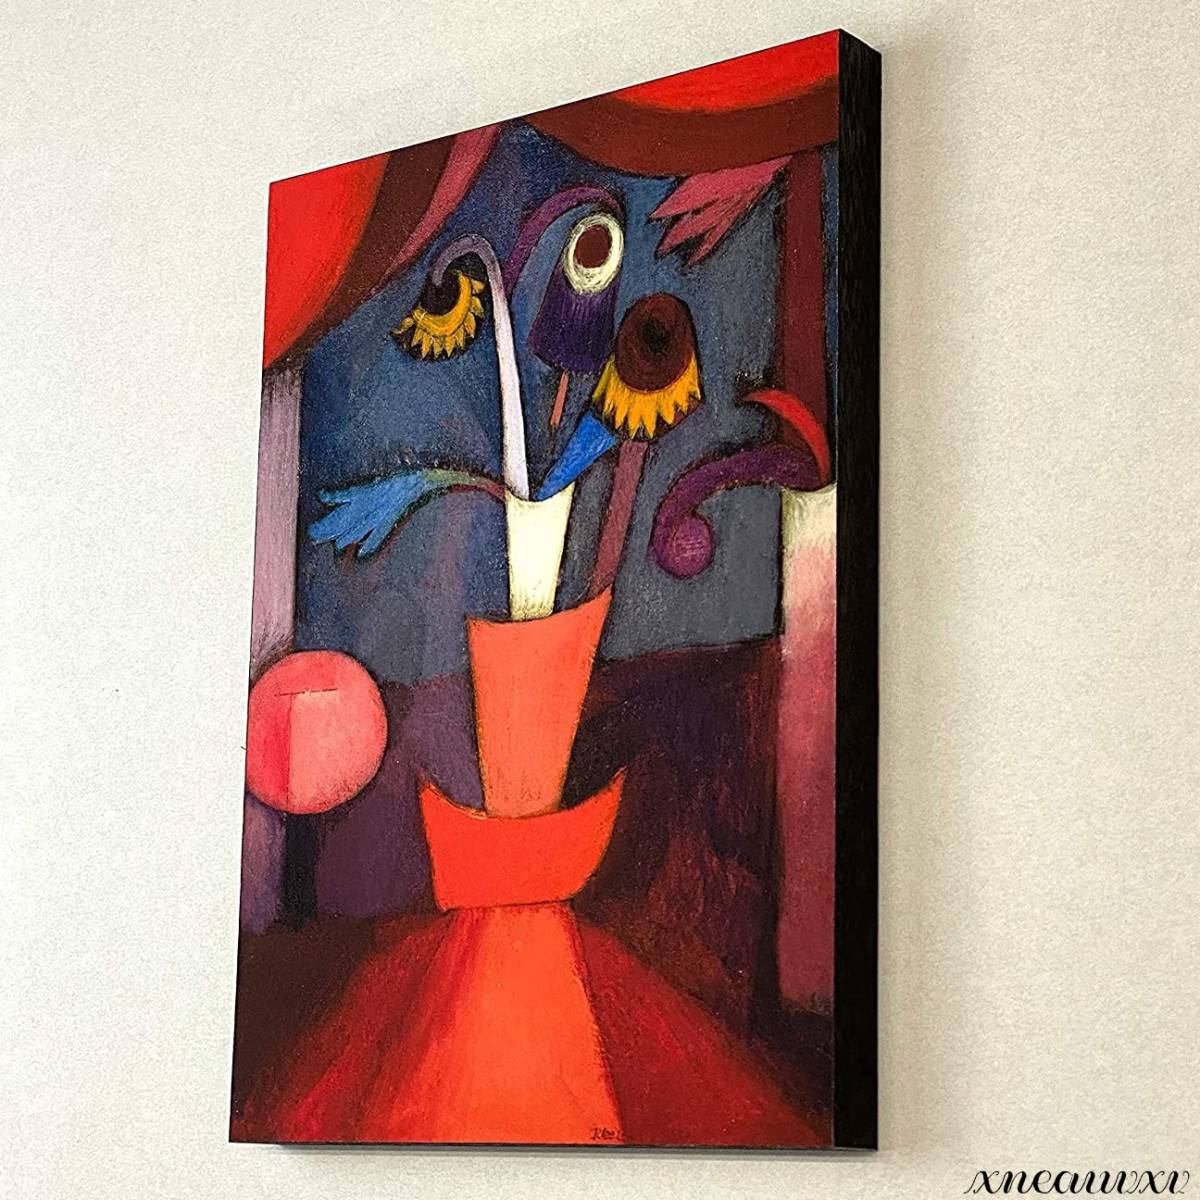 Paul Klee 가을 꽃 아트 패널 유명한 그림 복제 추상 나무 인테리어 벽 매달려 장식 캔버스 회화 세련된 현대 인테리어 재 장식 룸, 삽화, 그림, 파스텔 그림, 크레용 그리기